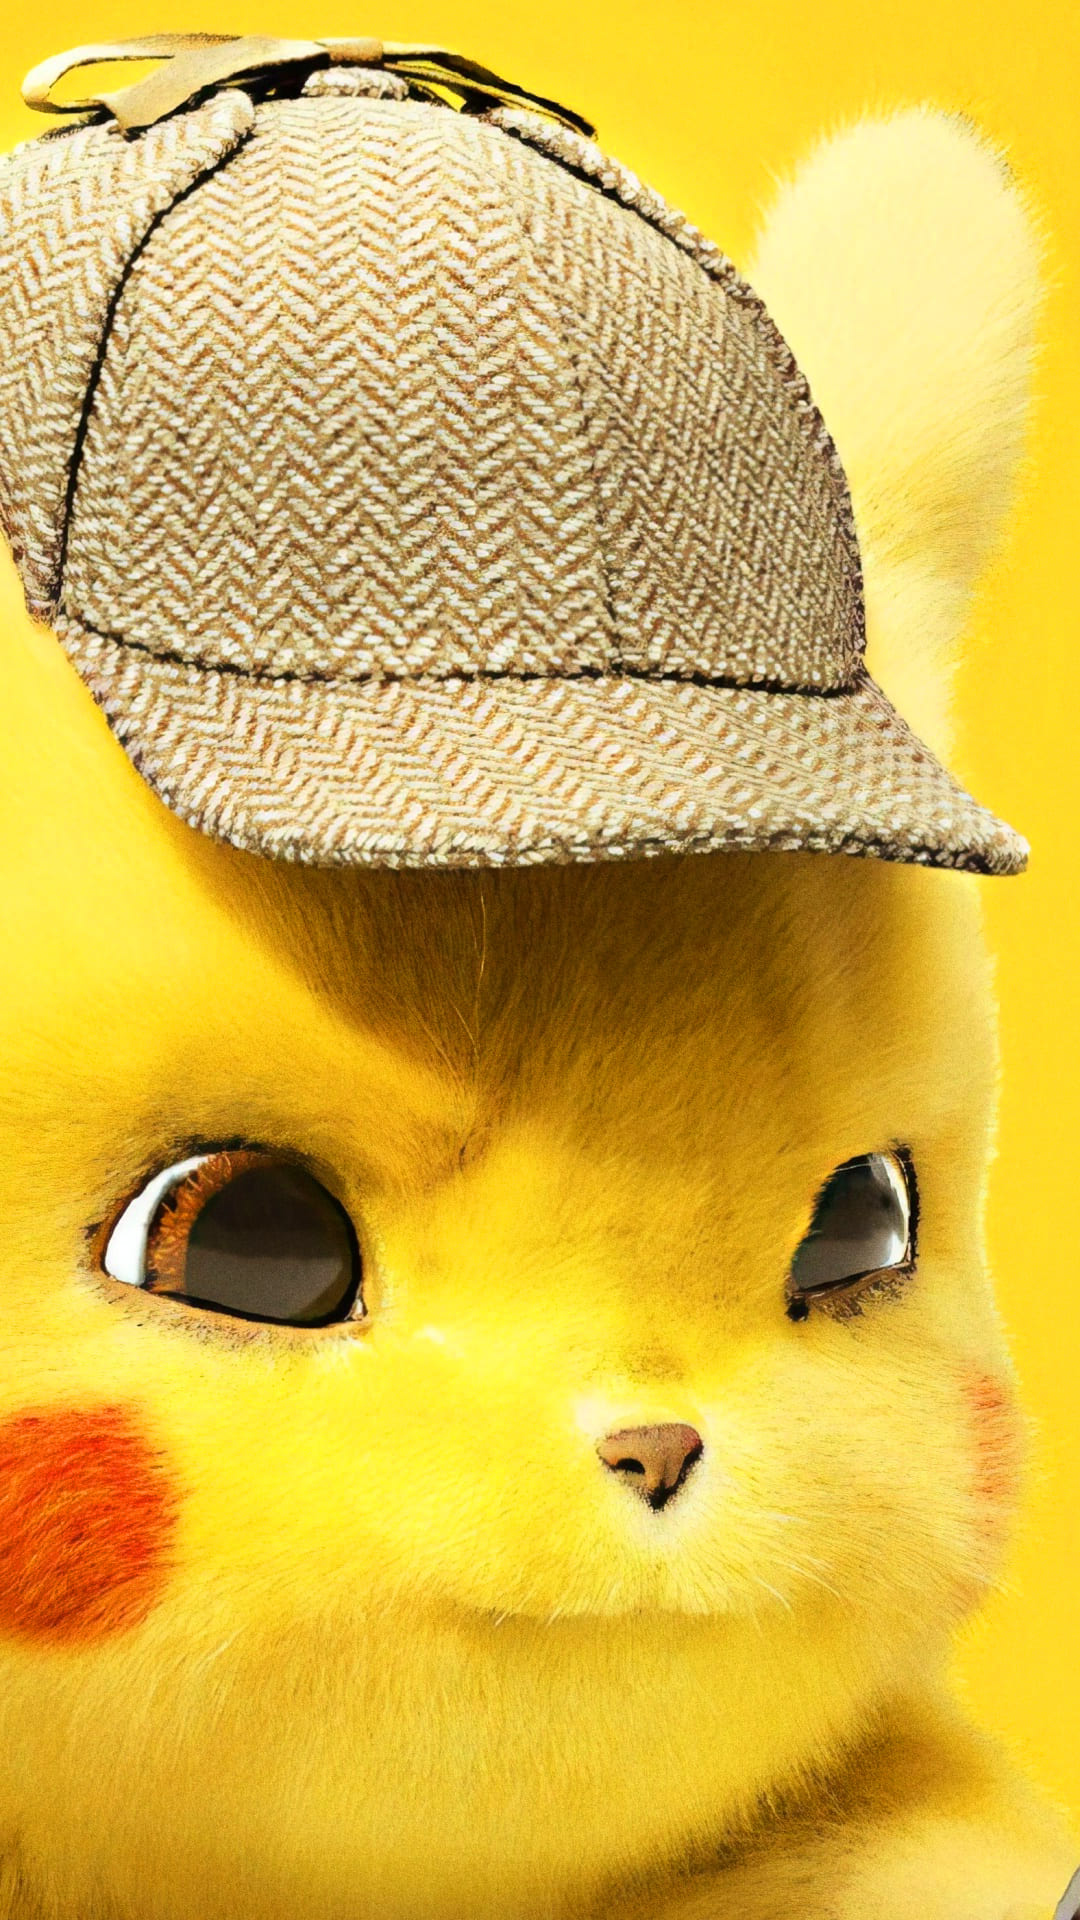 Cute Pikachu Wallpaper